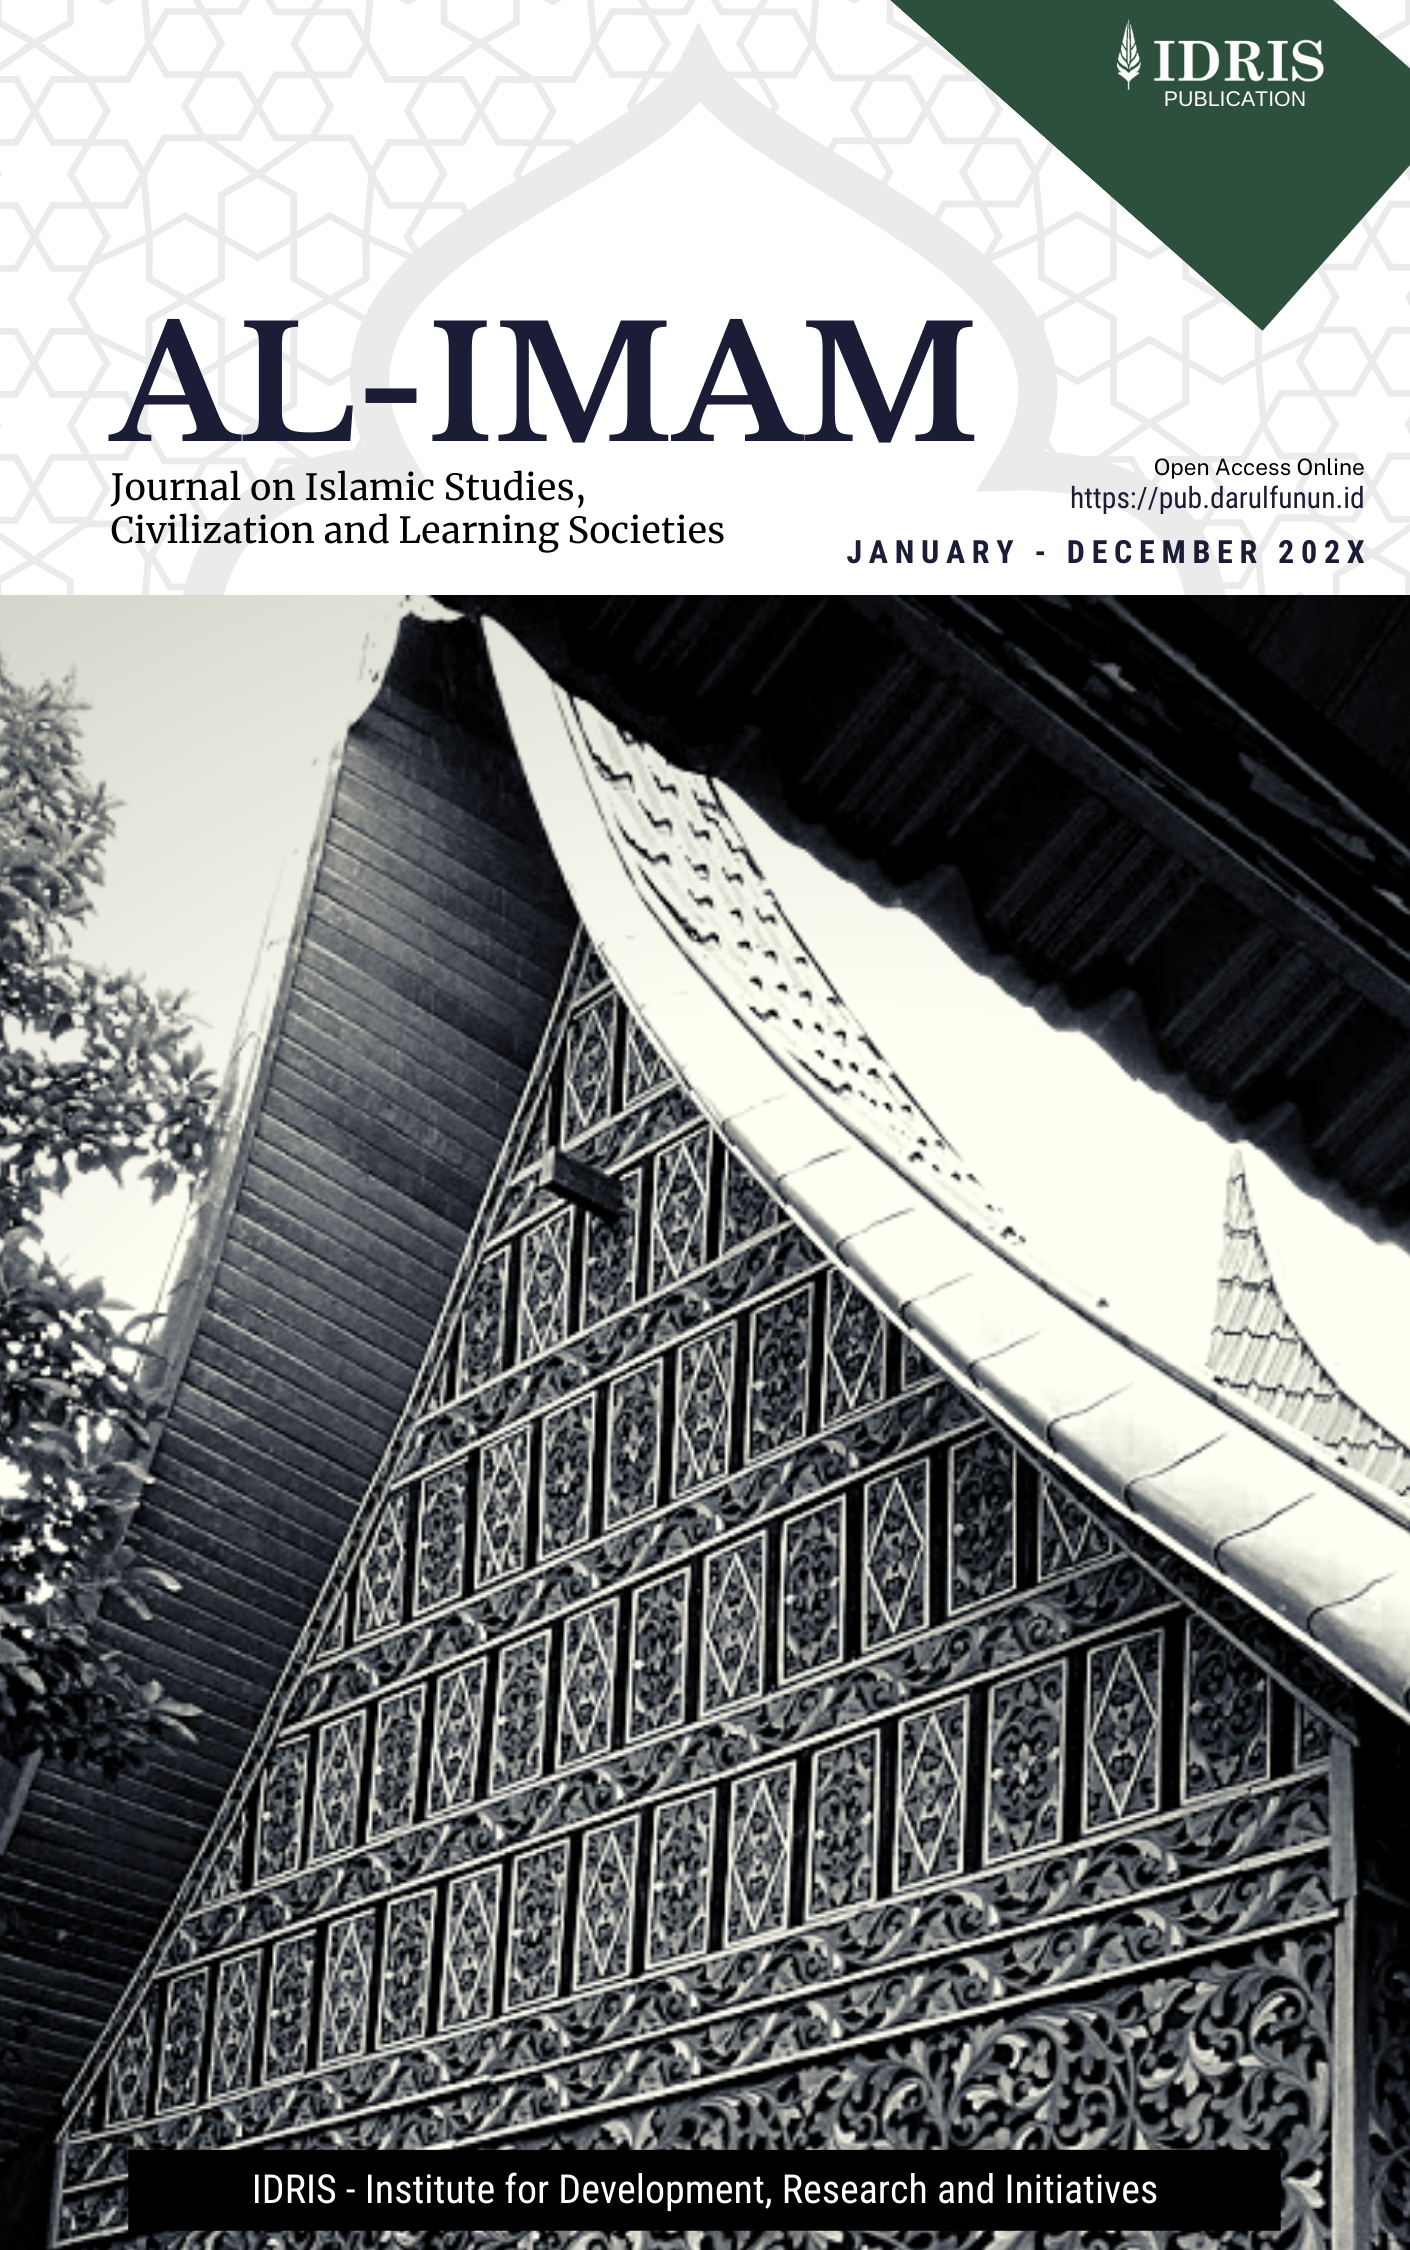 AL-IMAM: Journal on Islamic Studies, Civilization and Learning Societies